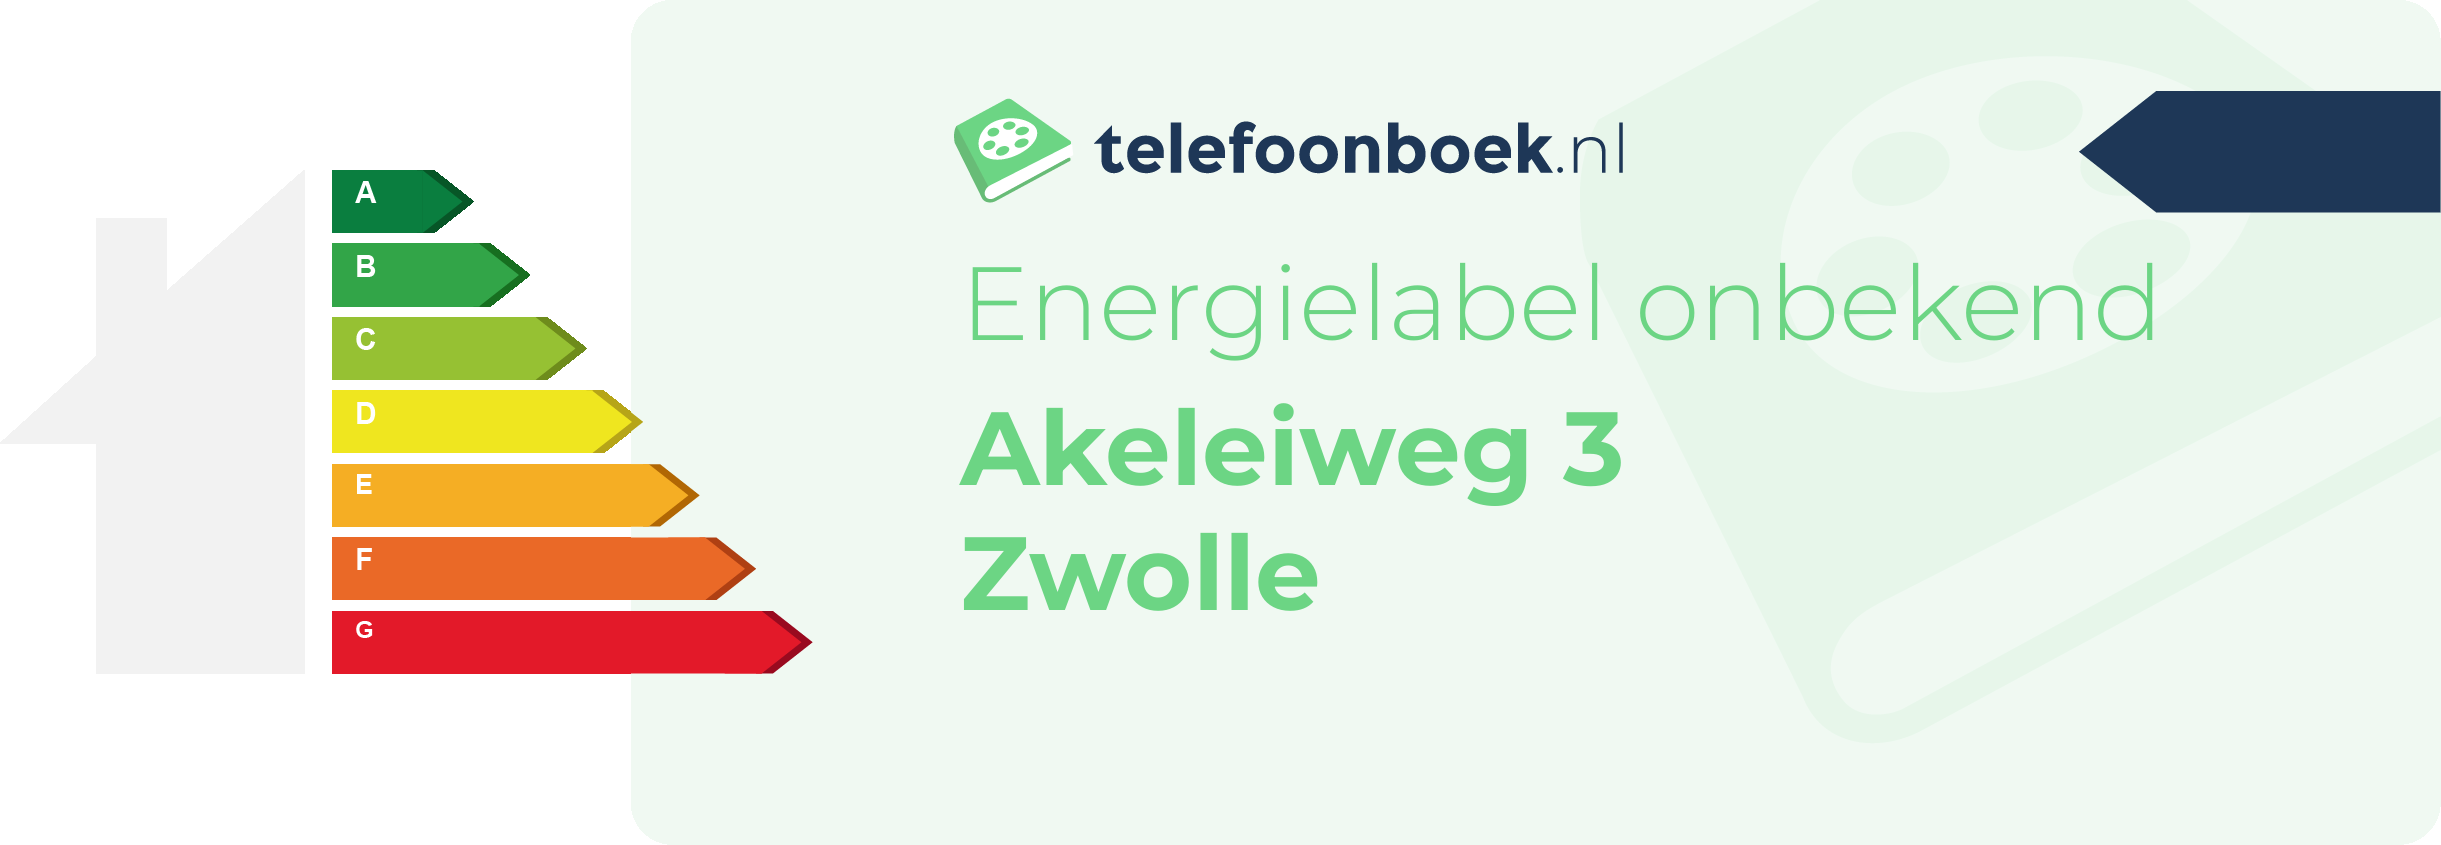 Energielabel Akeleiweg 3 Zwolle